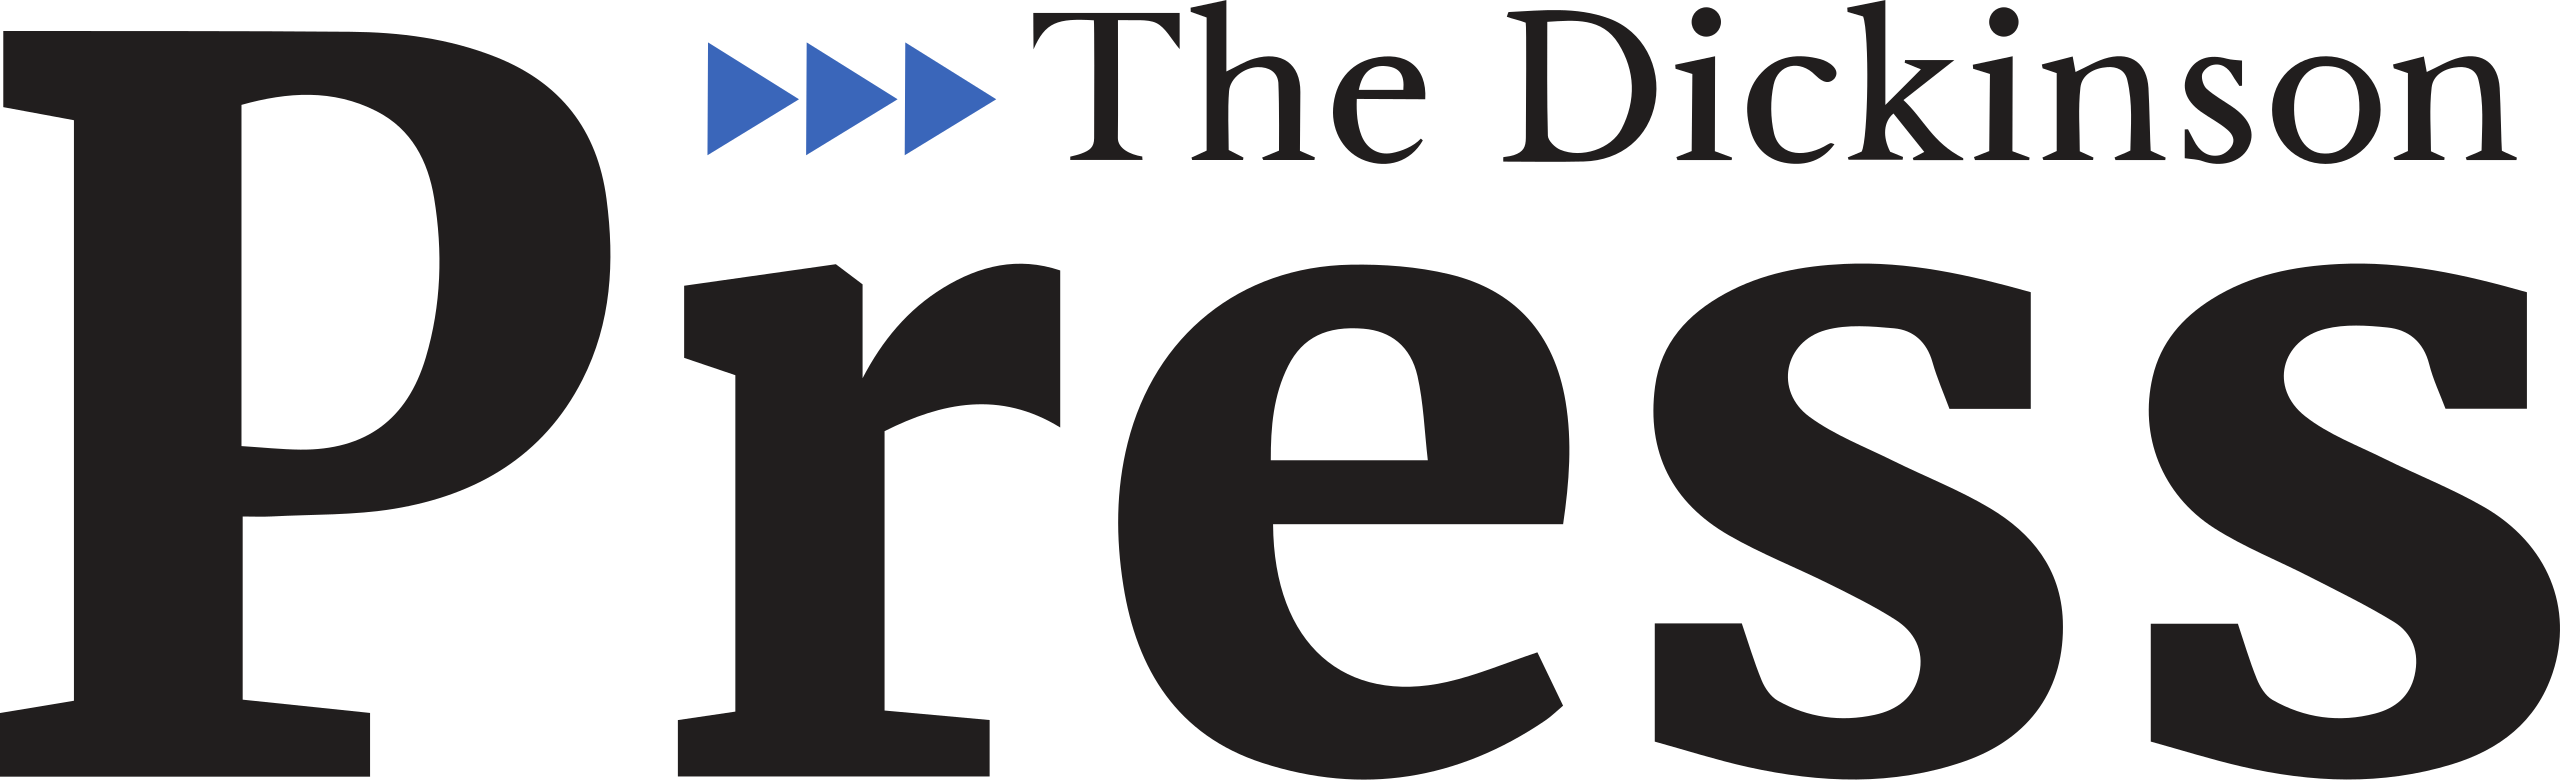 The Dickinson Press logo